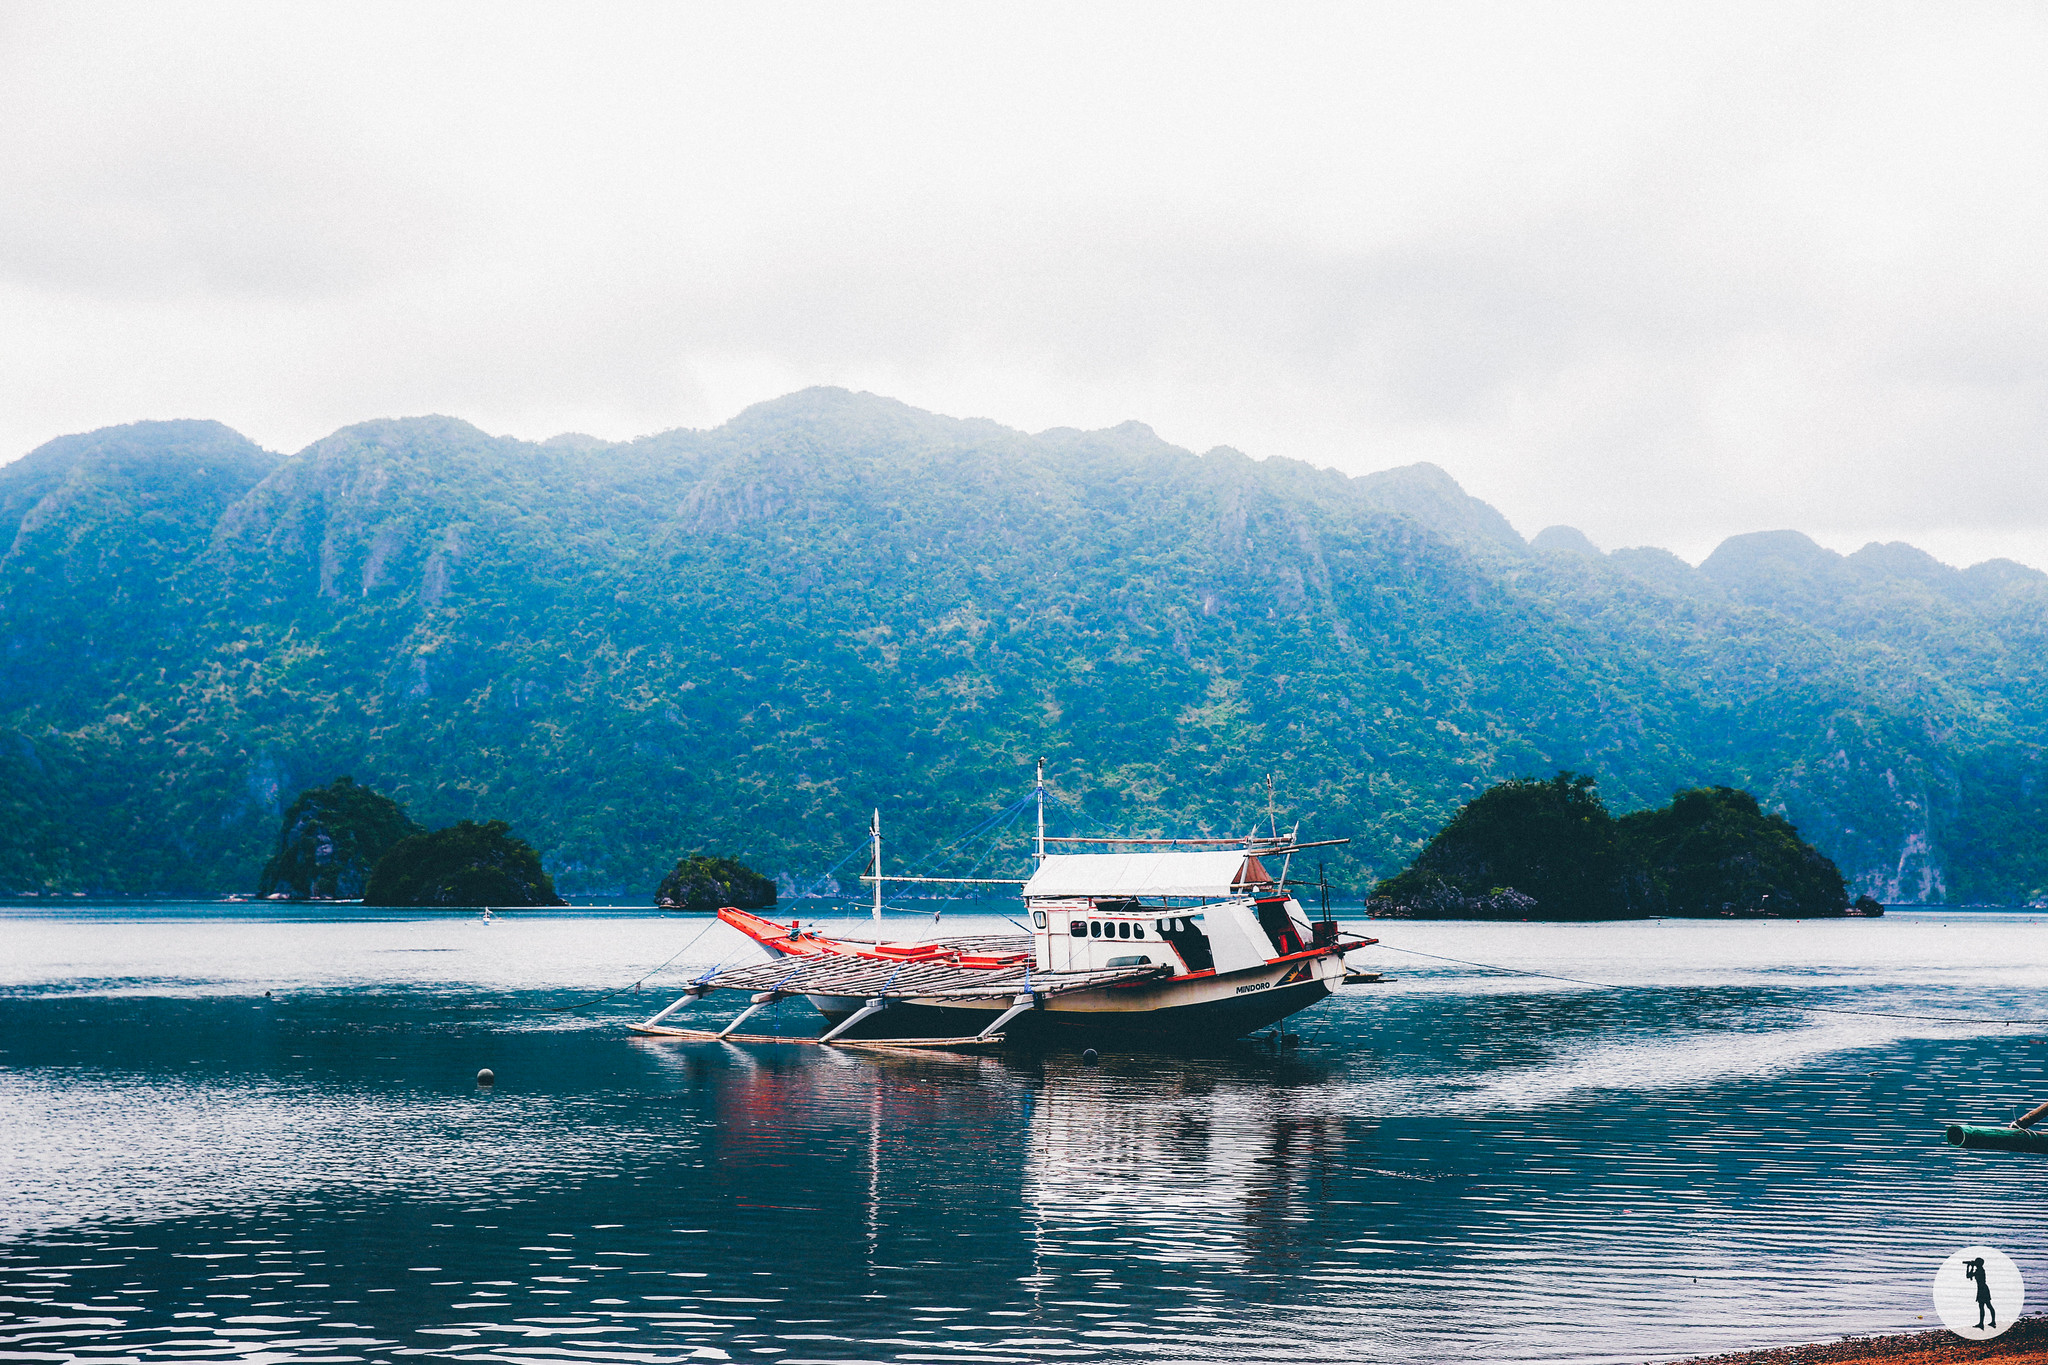 Travel to the Philippines - Siete Pecados, Busuanga Island.